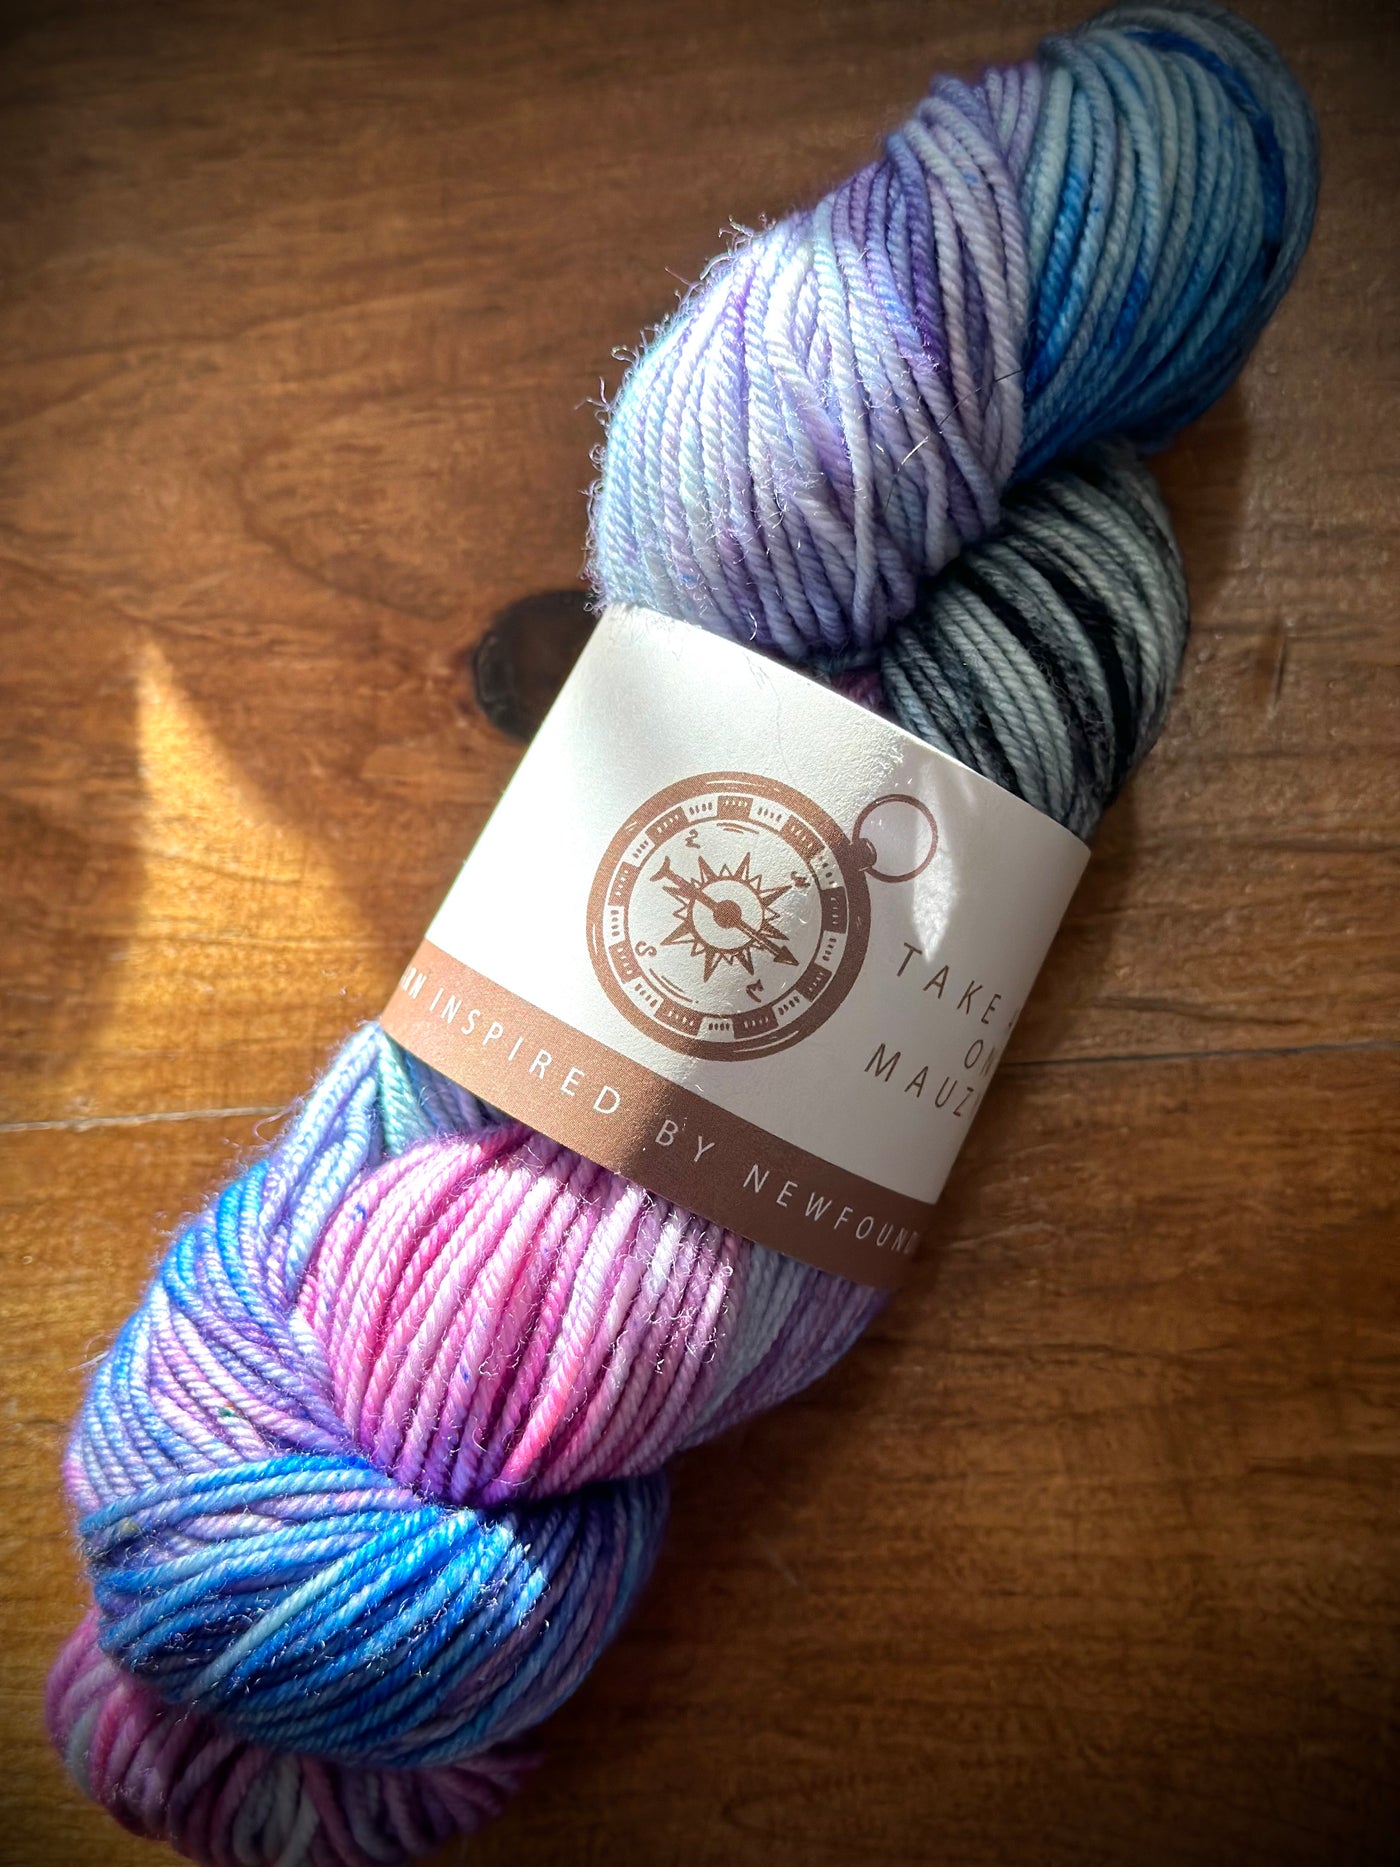 SeaSpun - Take A Trot On A Mauzy Day - Hand Dyed Yarn Inspired By Newfoundland Scenery